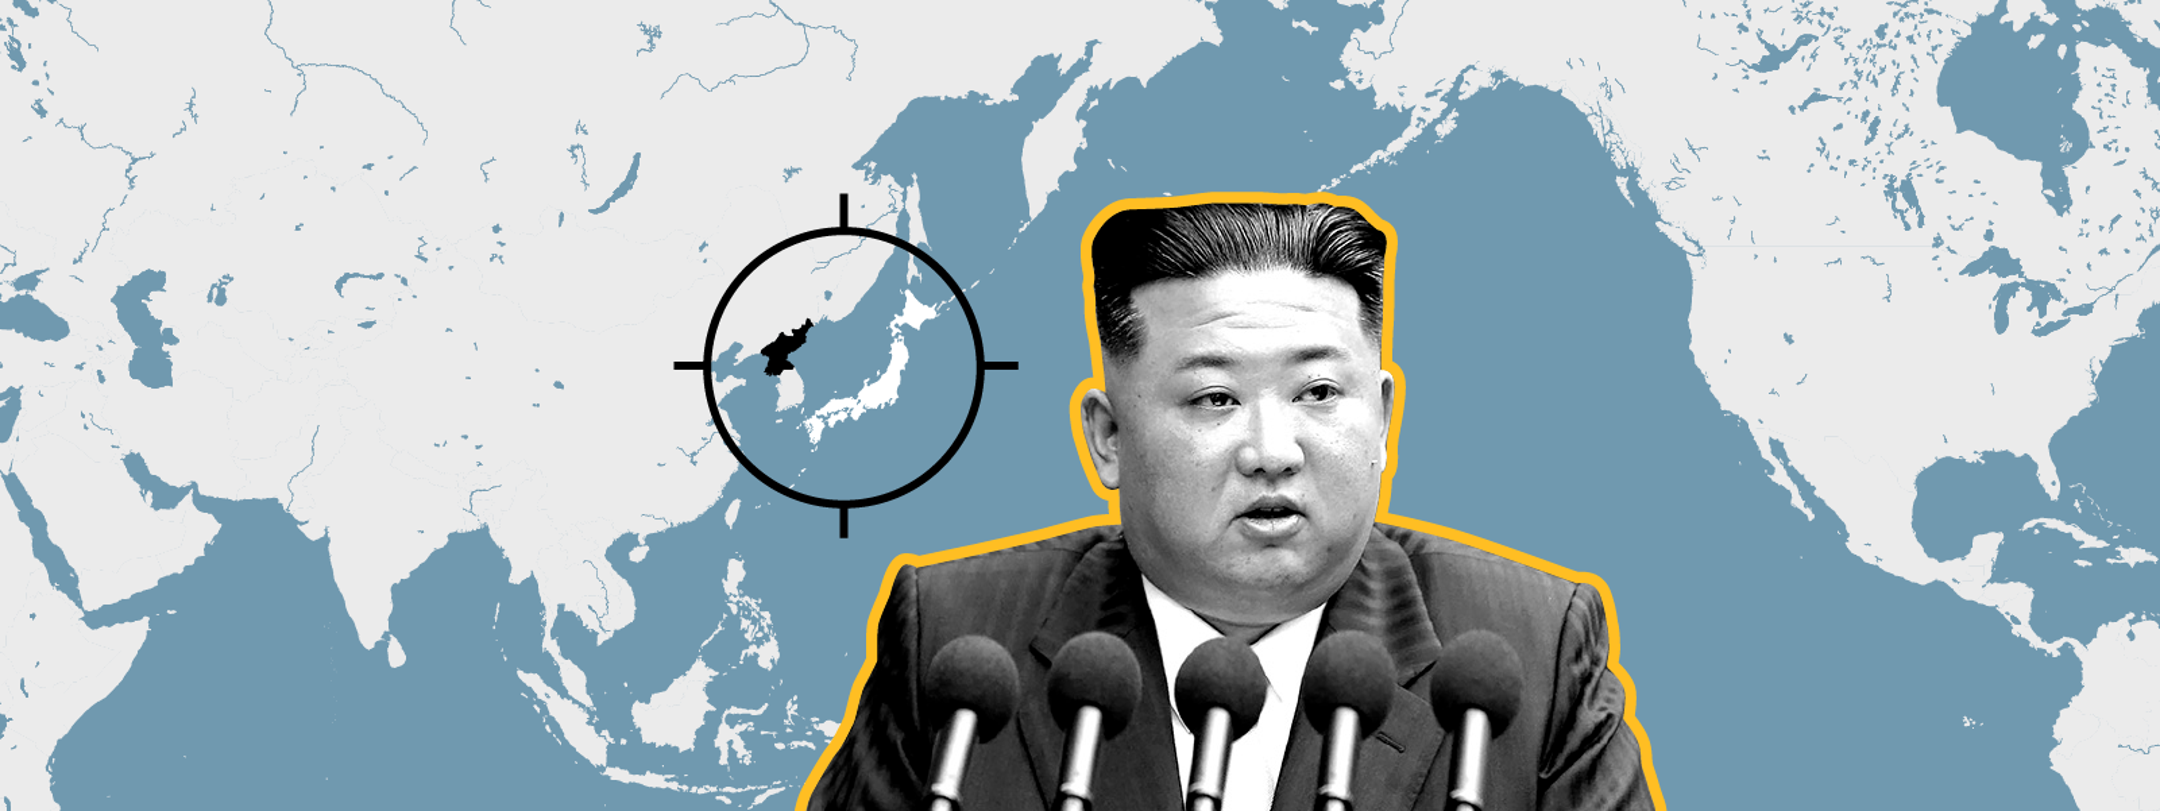 North Korea sends missile soaring over Japan in escalation - POLITICO